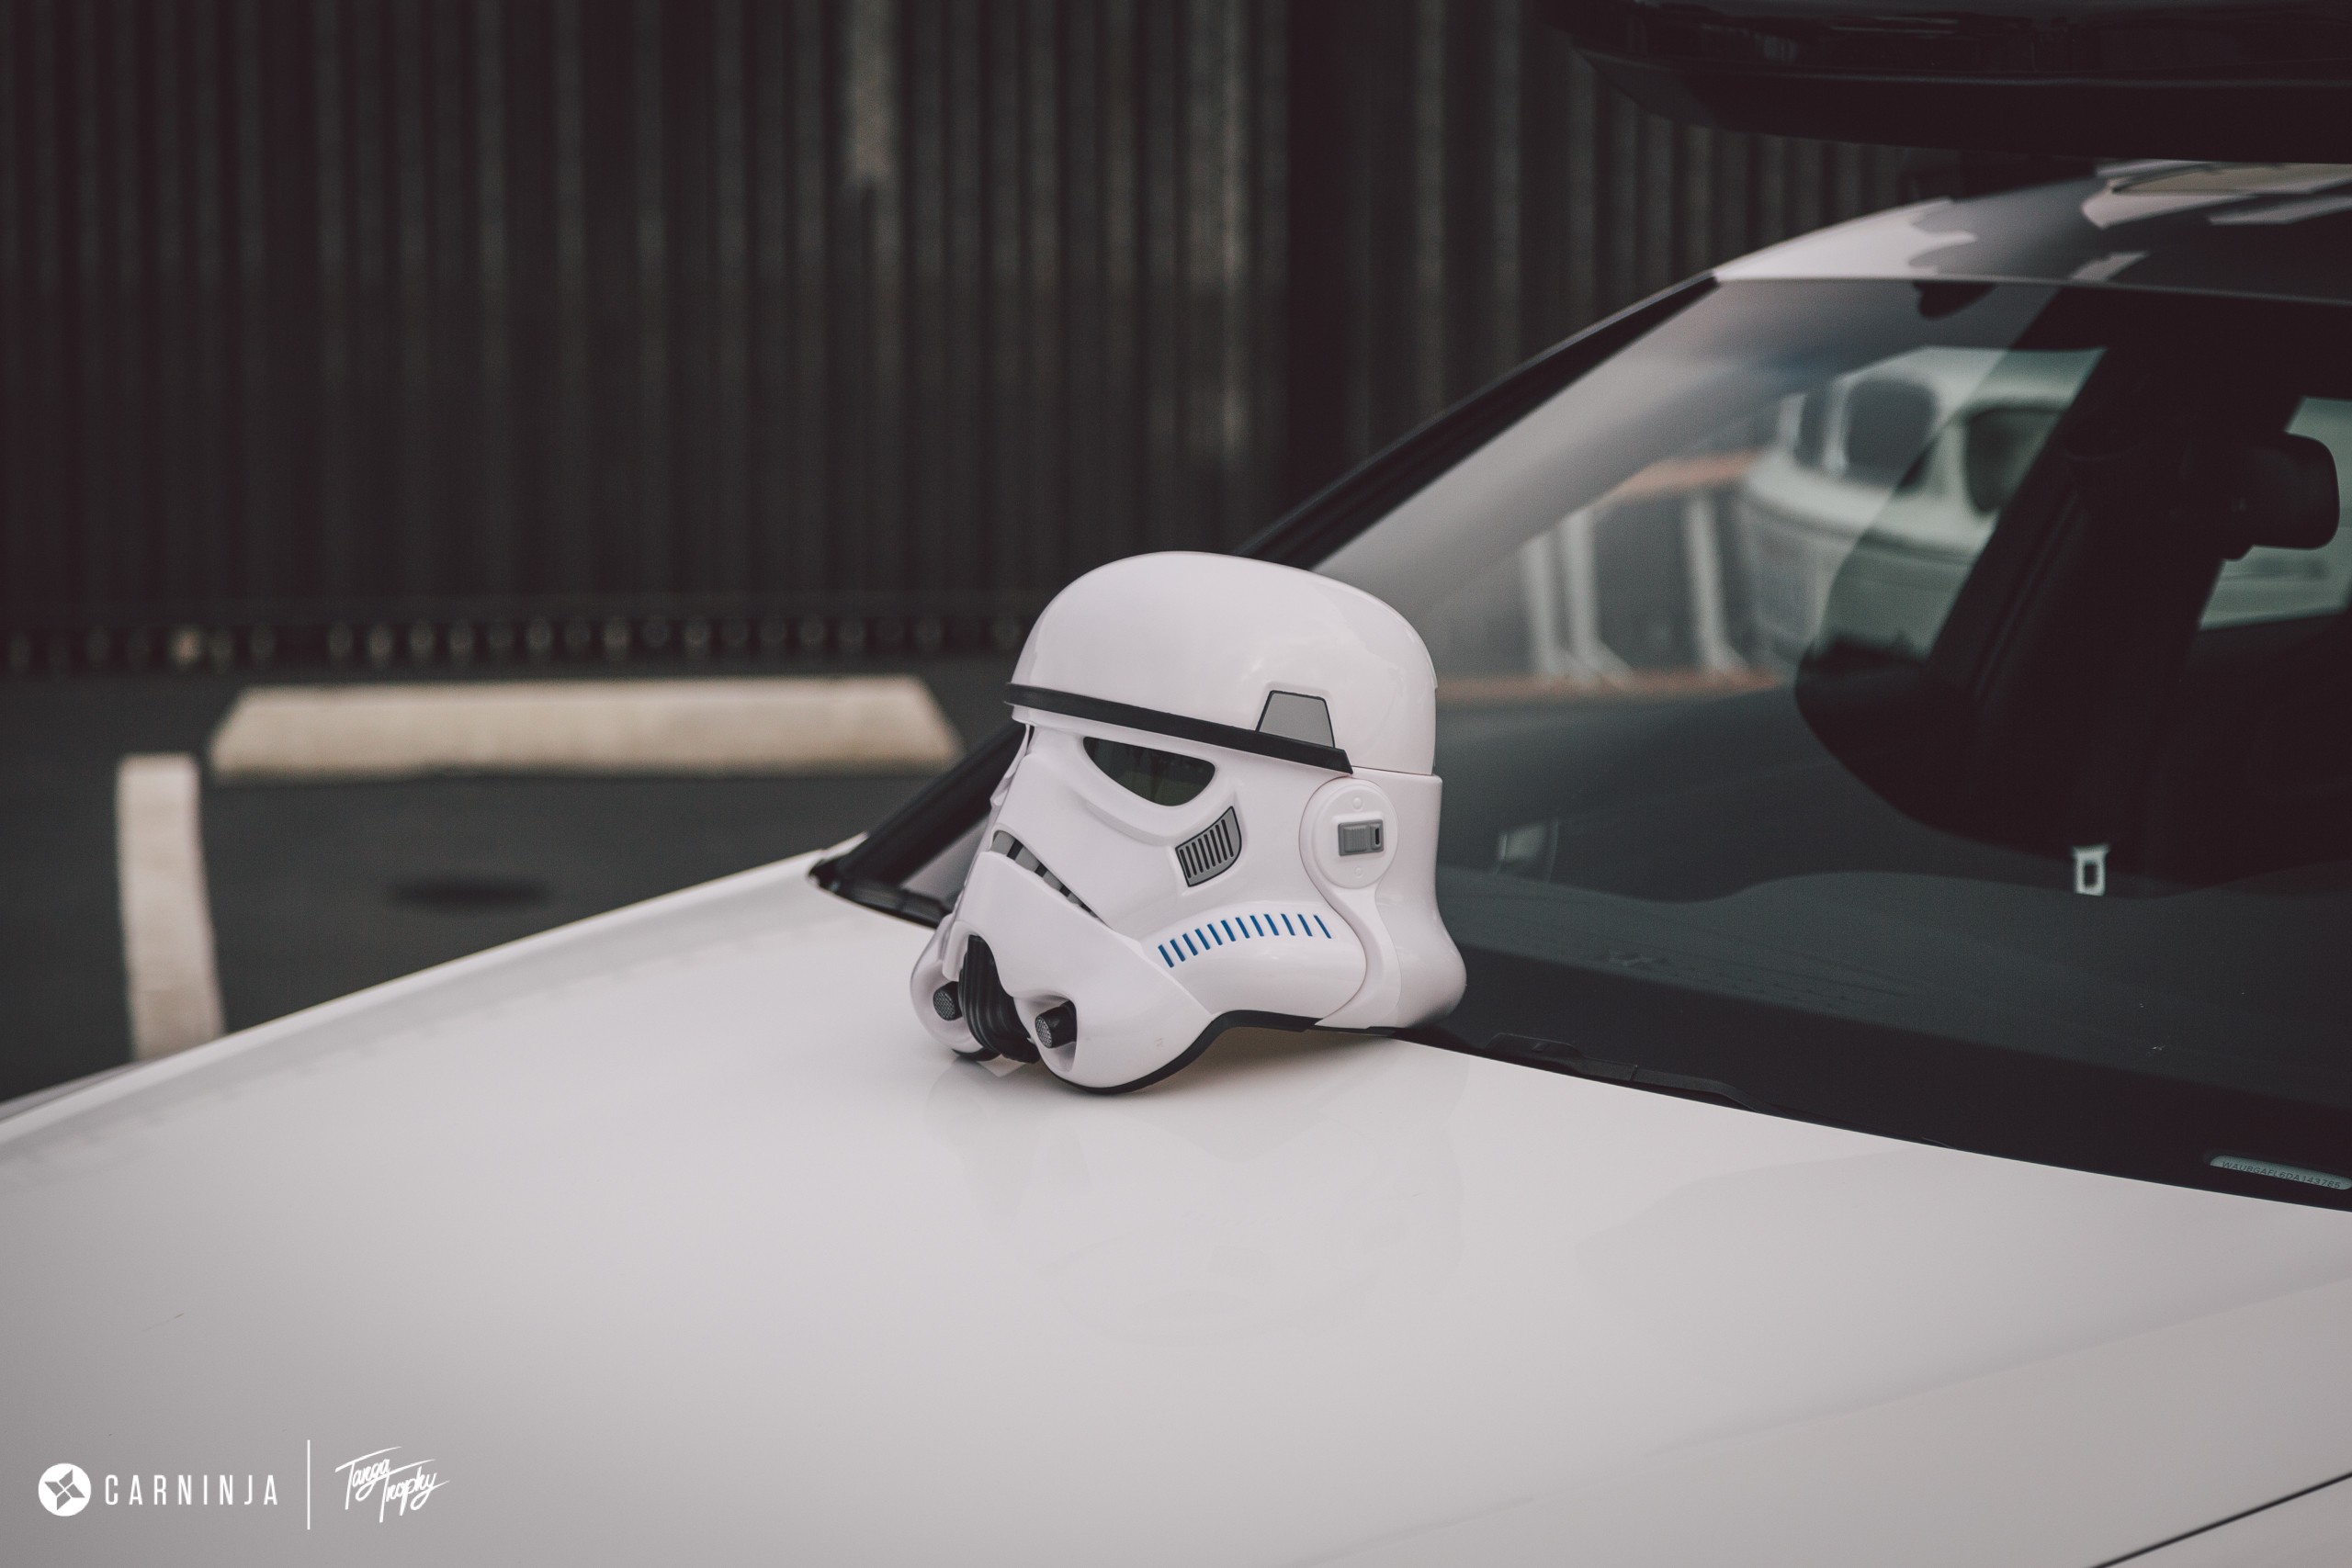 General 2560x1707 Carninja car smiling helmet Star Wars stormtrooper